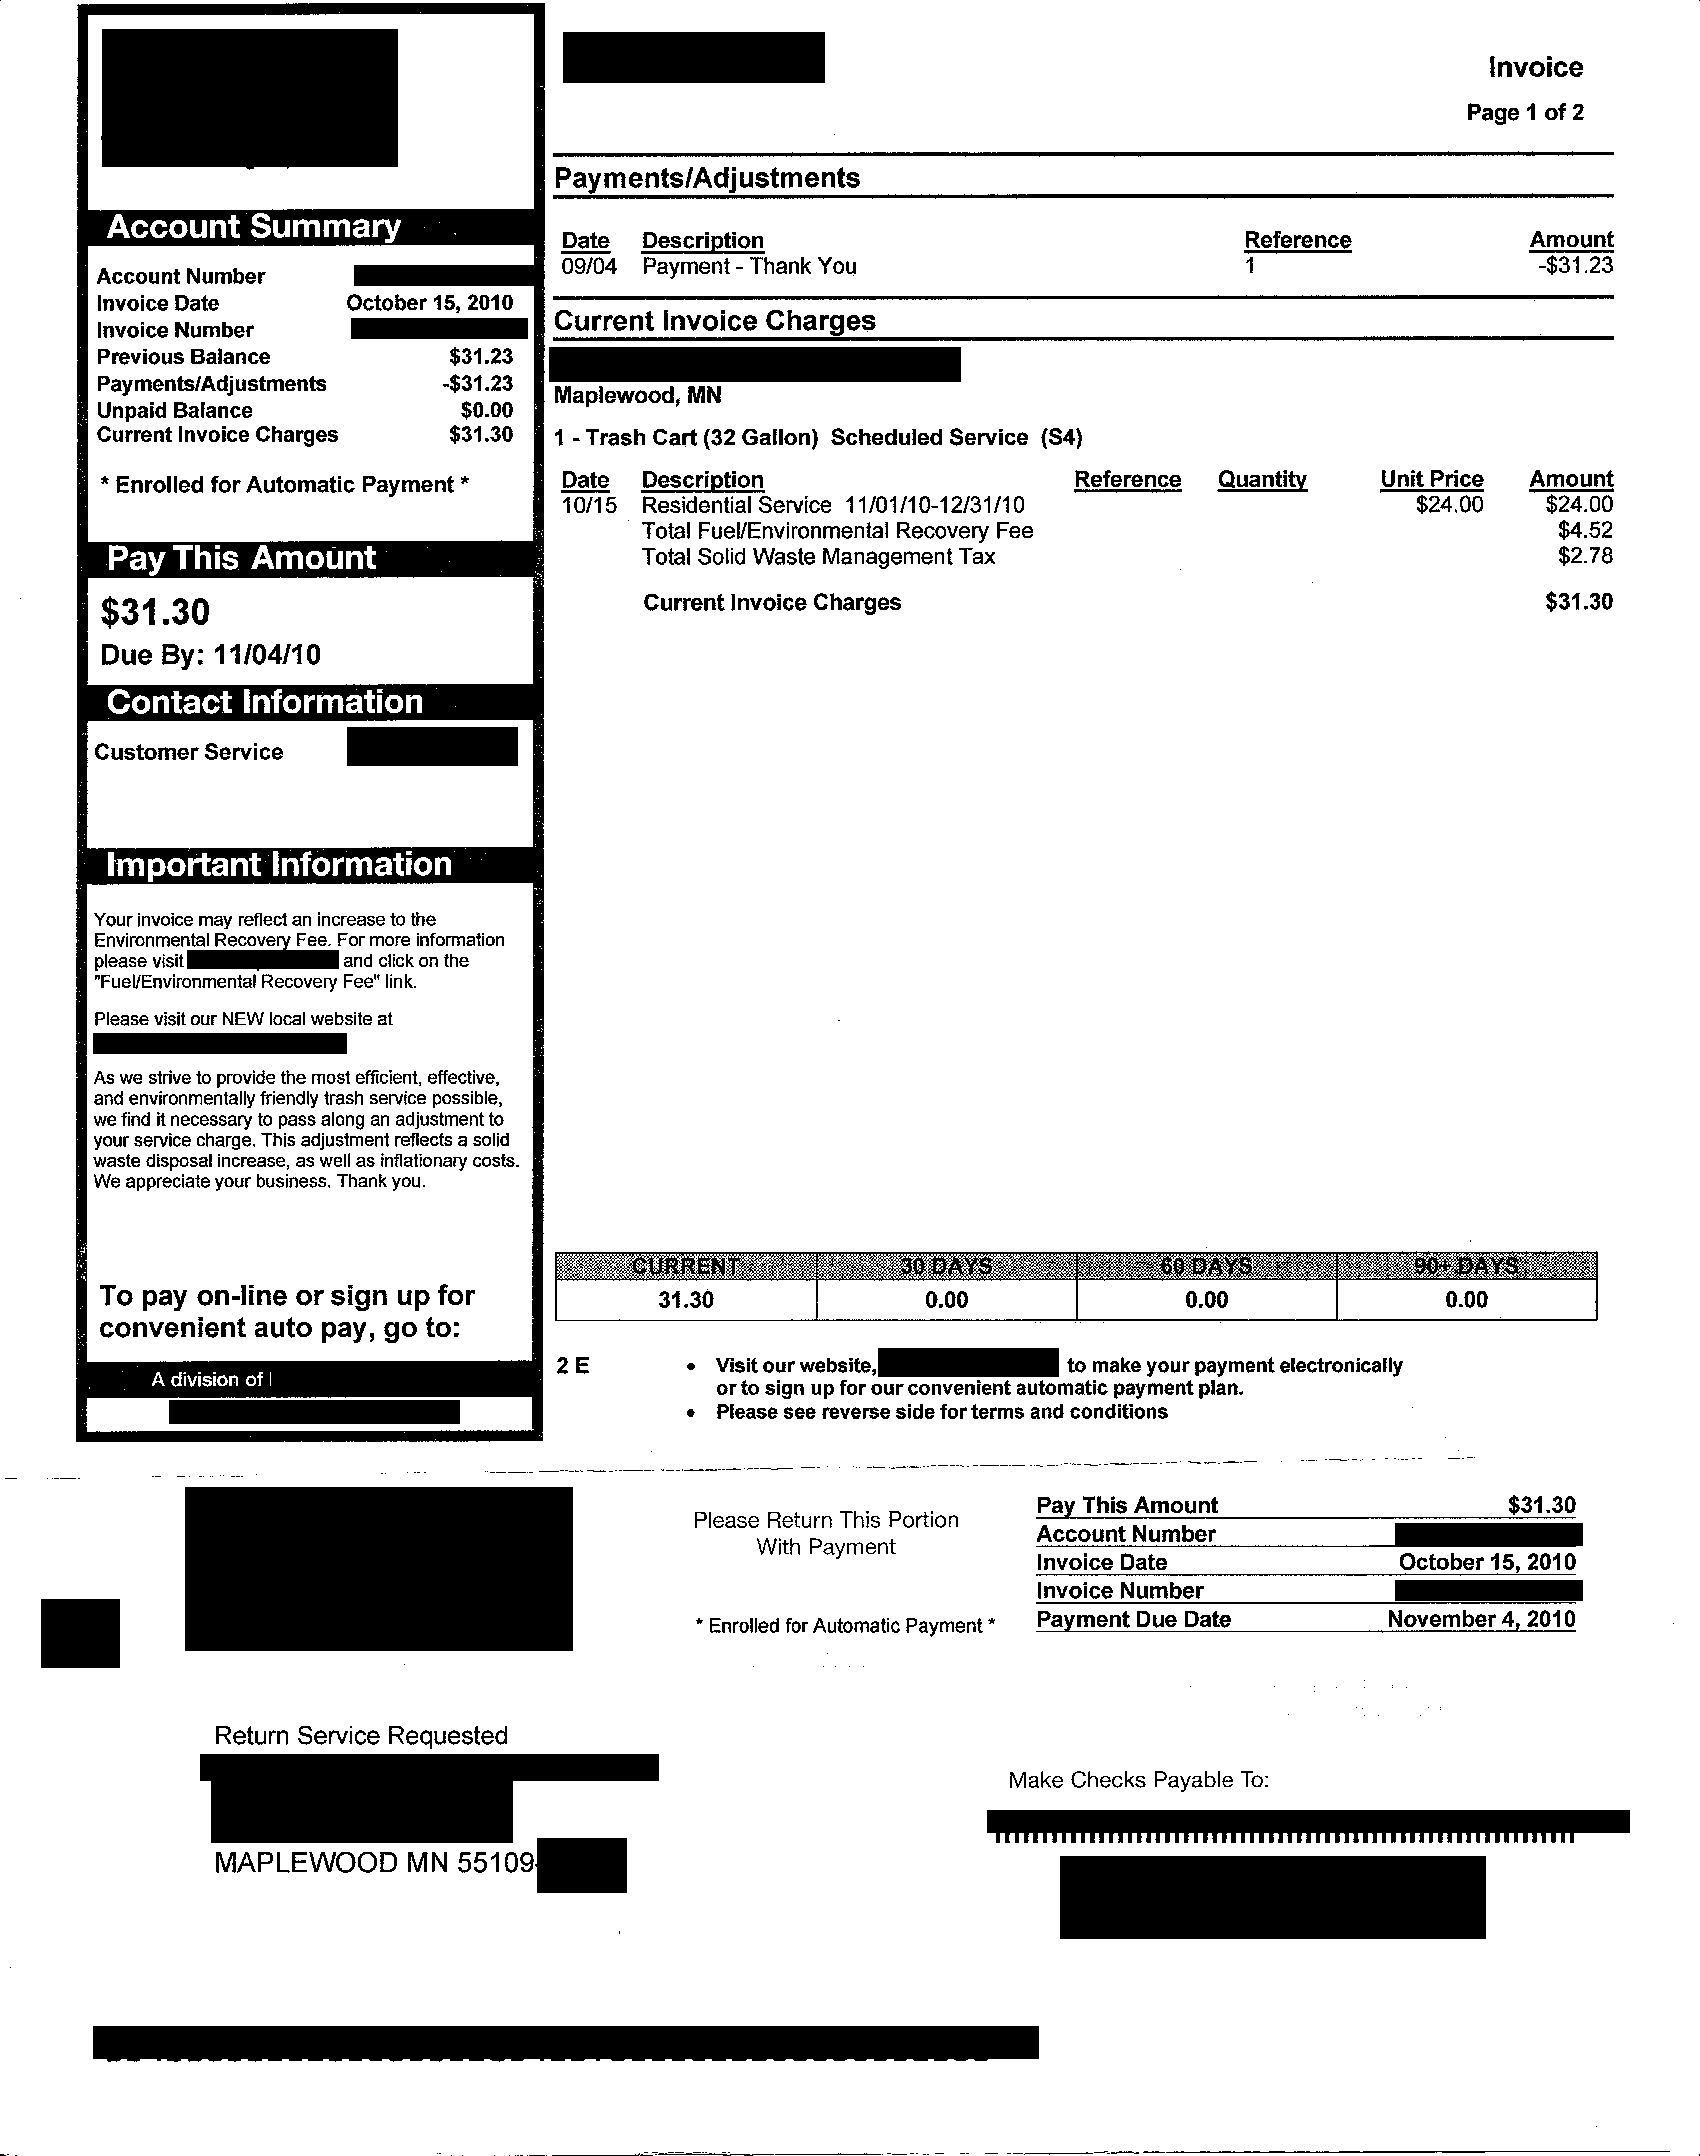 redacted invoice